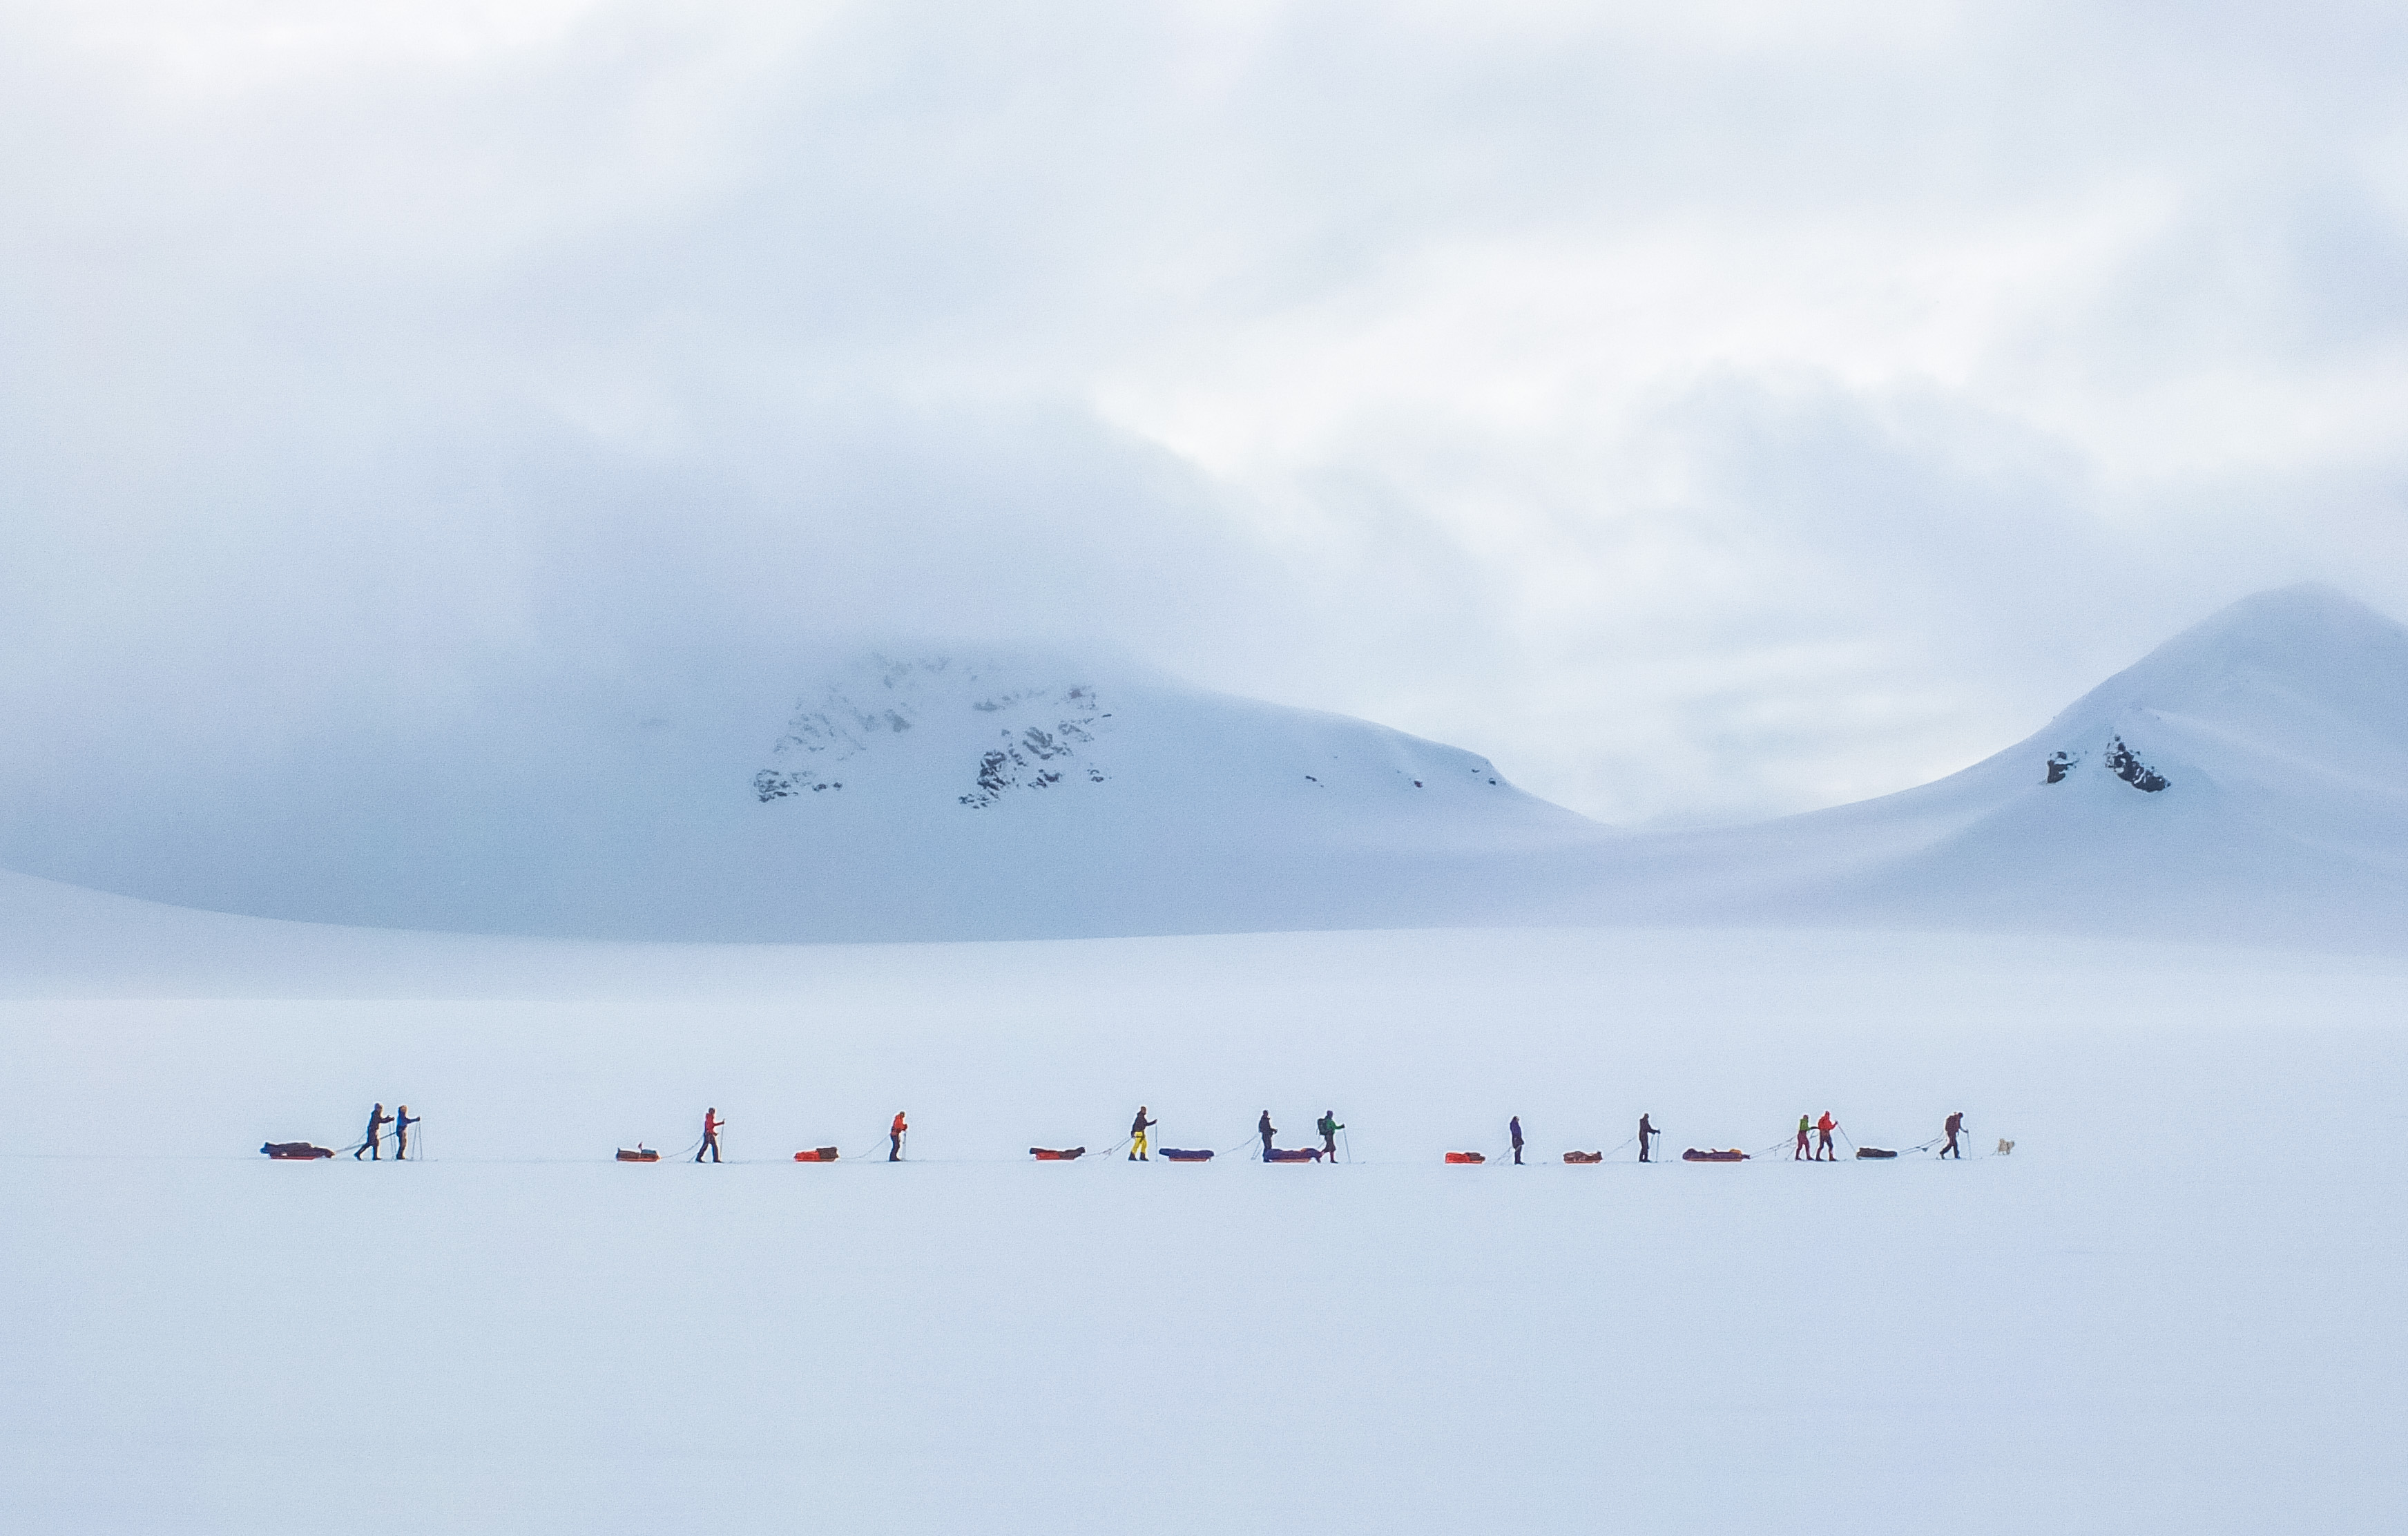 Crossing Svalbard East to West